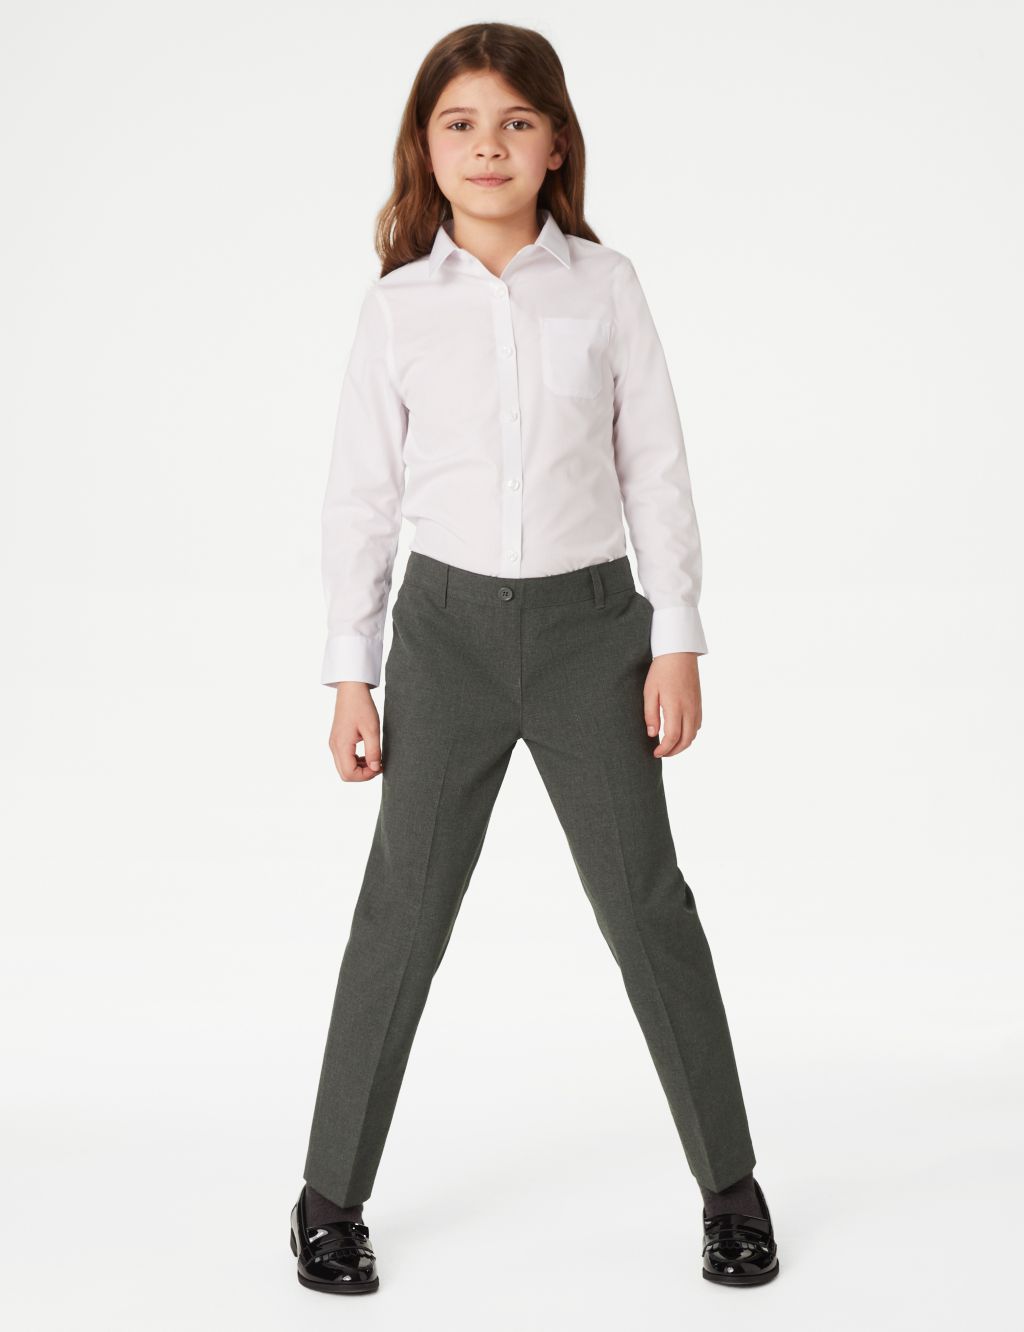 2pk Girls' Easy Dressing School Trousers (3-18 Yrs) image 2